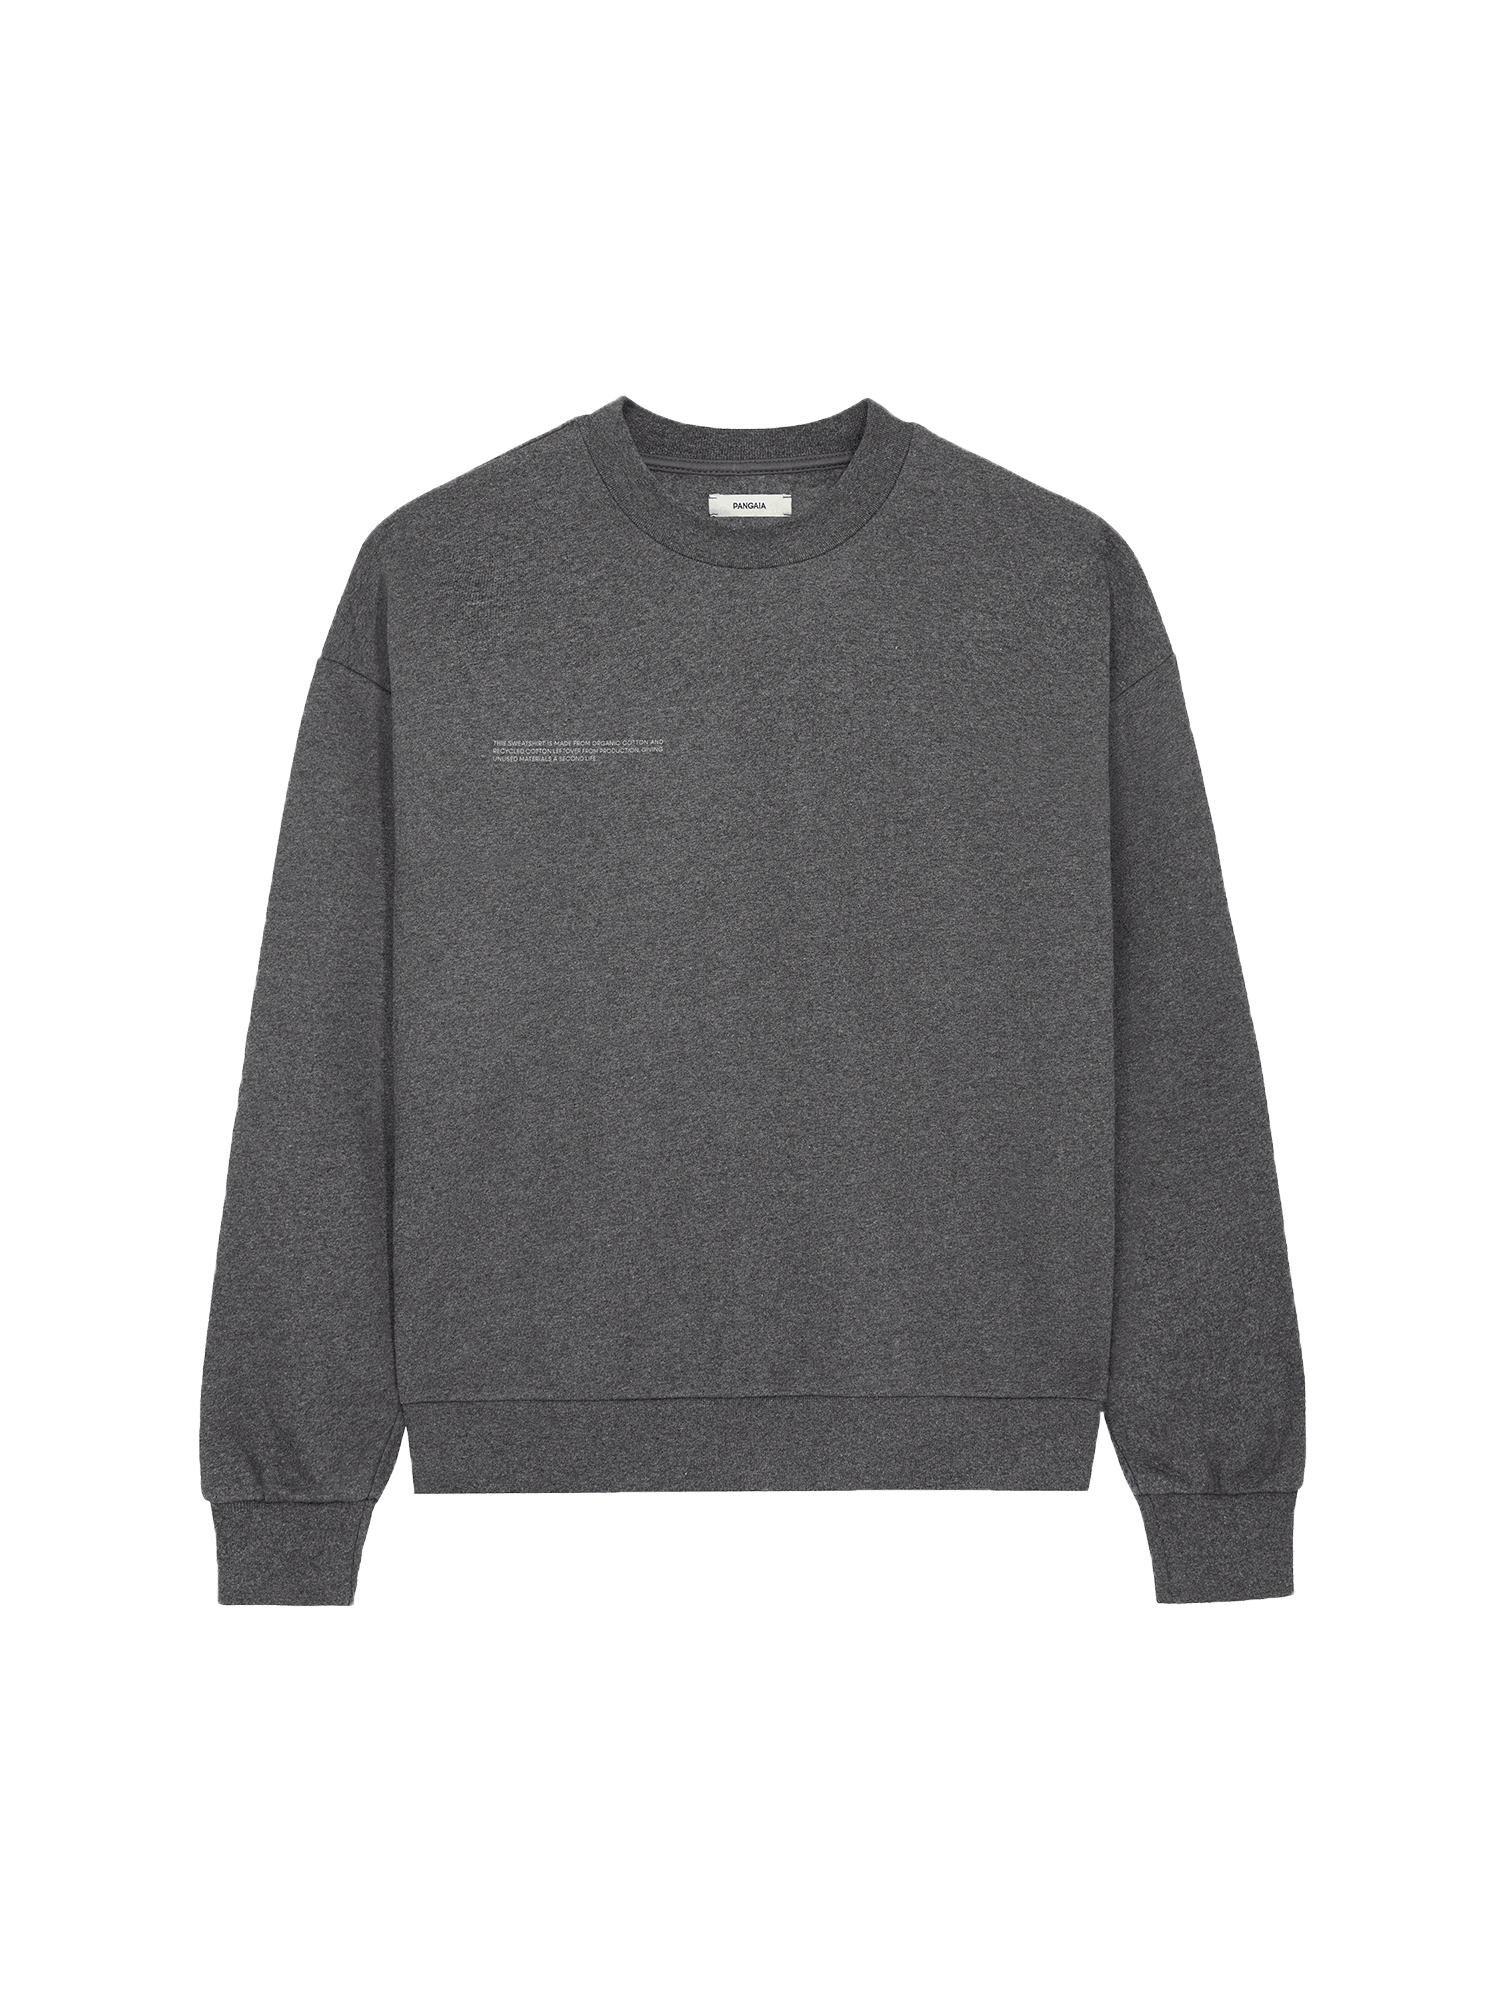 Reclaim-3.0-Sweatshirt-Reclaim-Charcoal-packshot-3